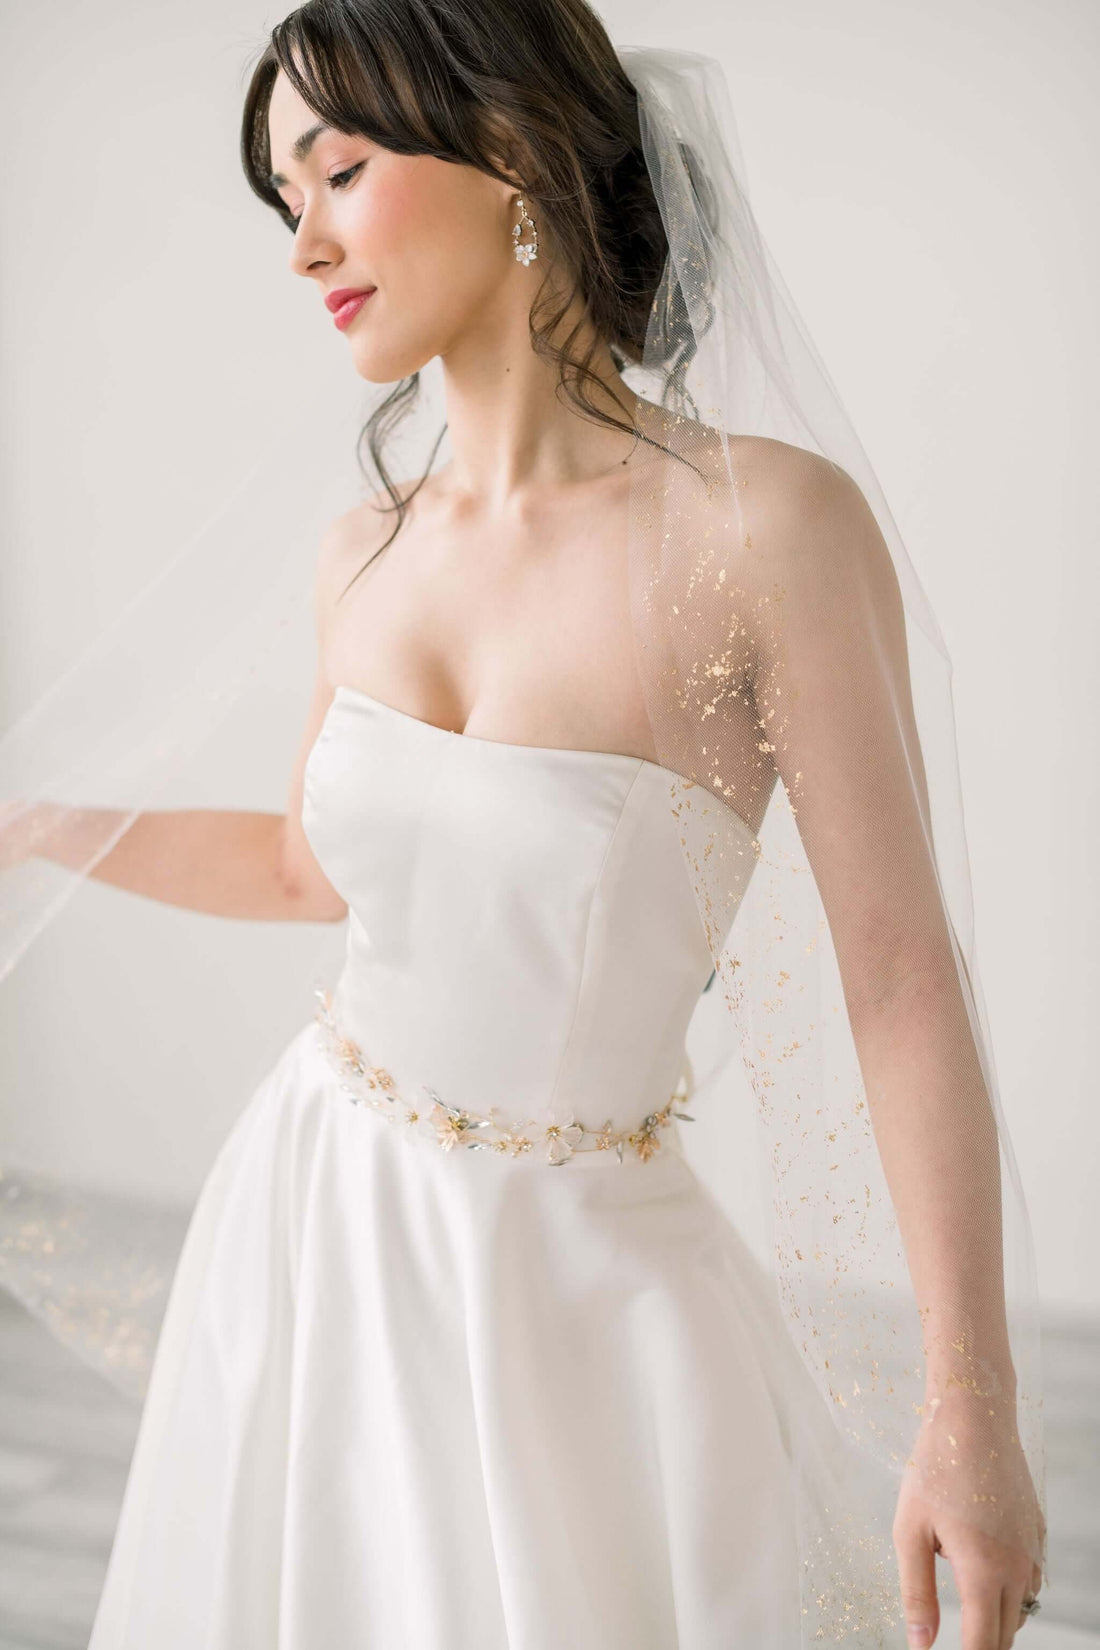 What length bridal veil is most popular? Tessa Kim